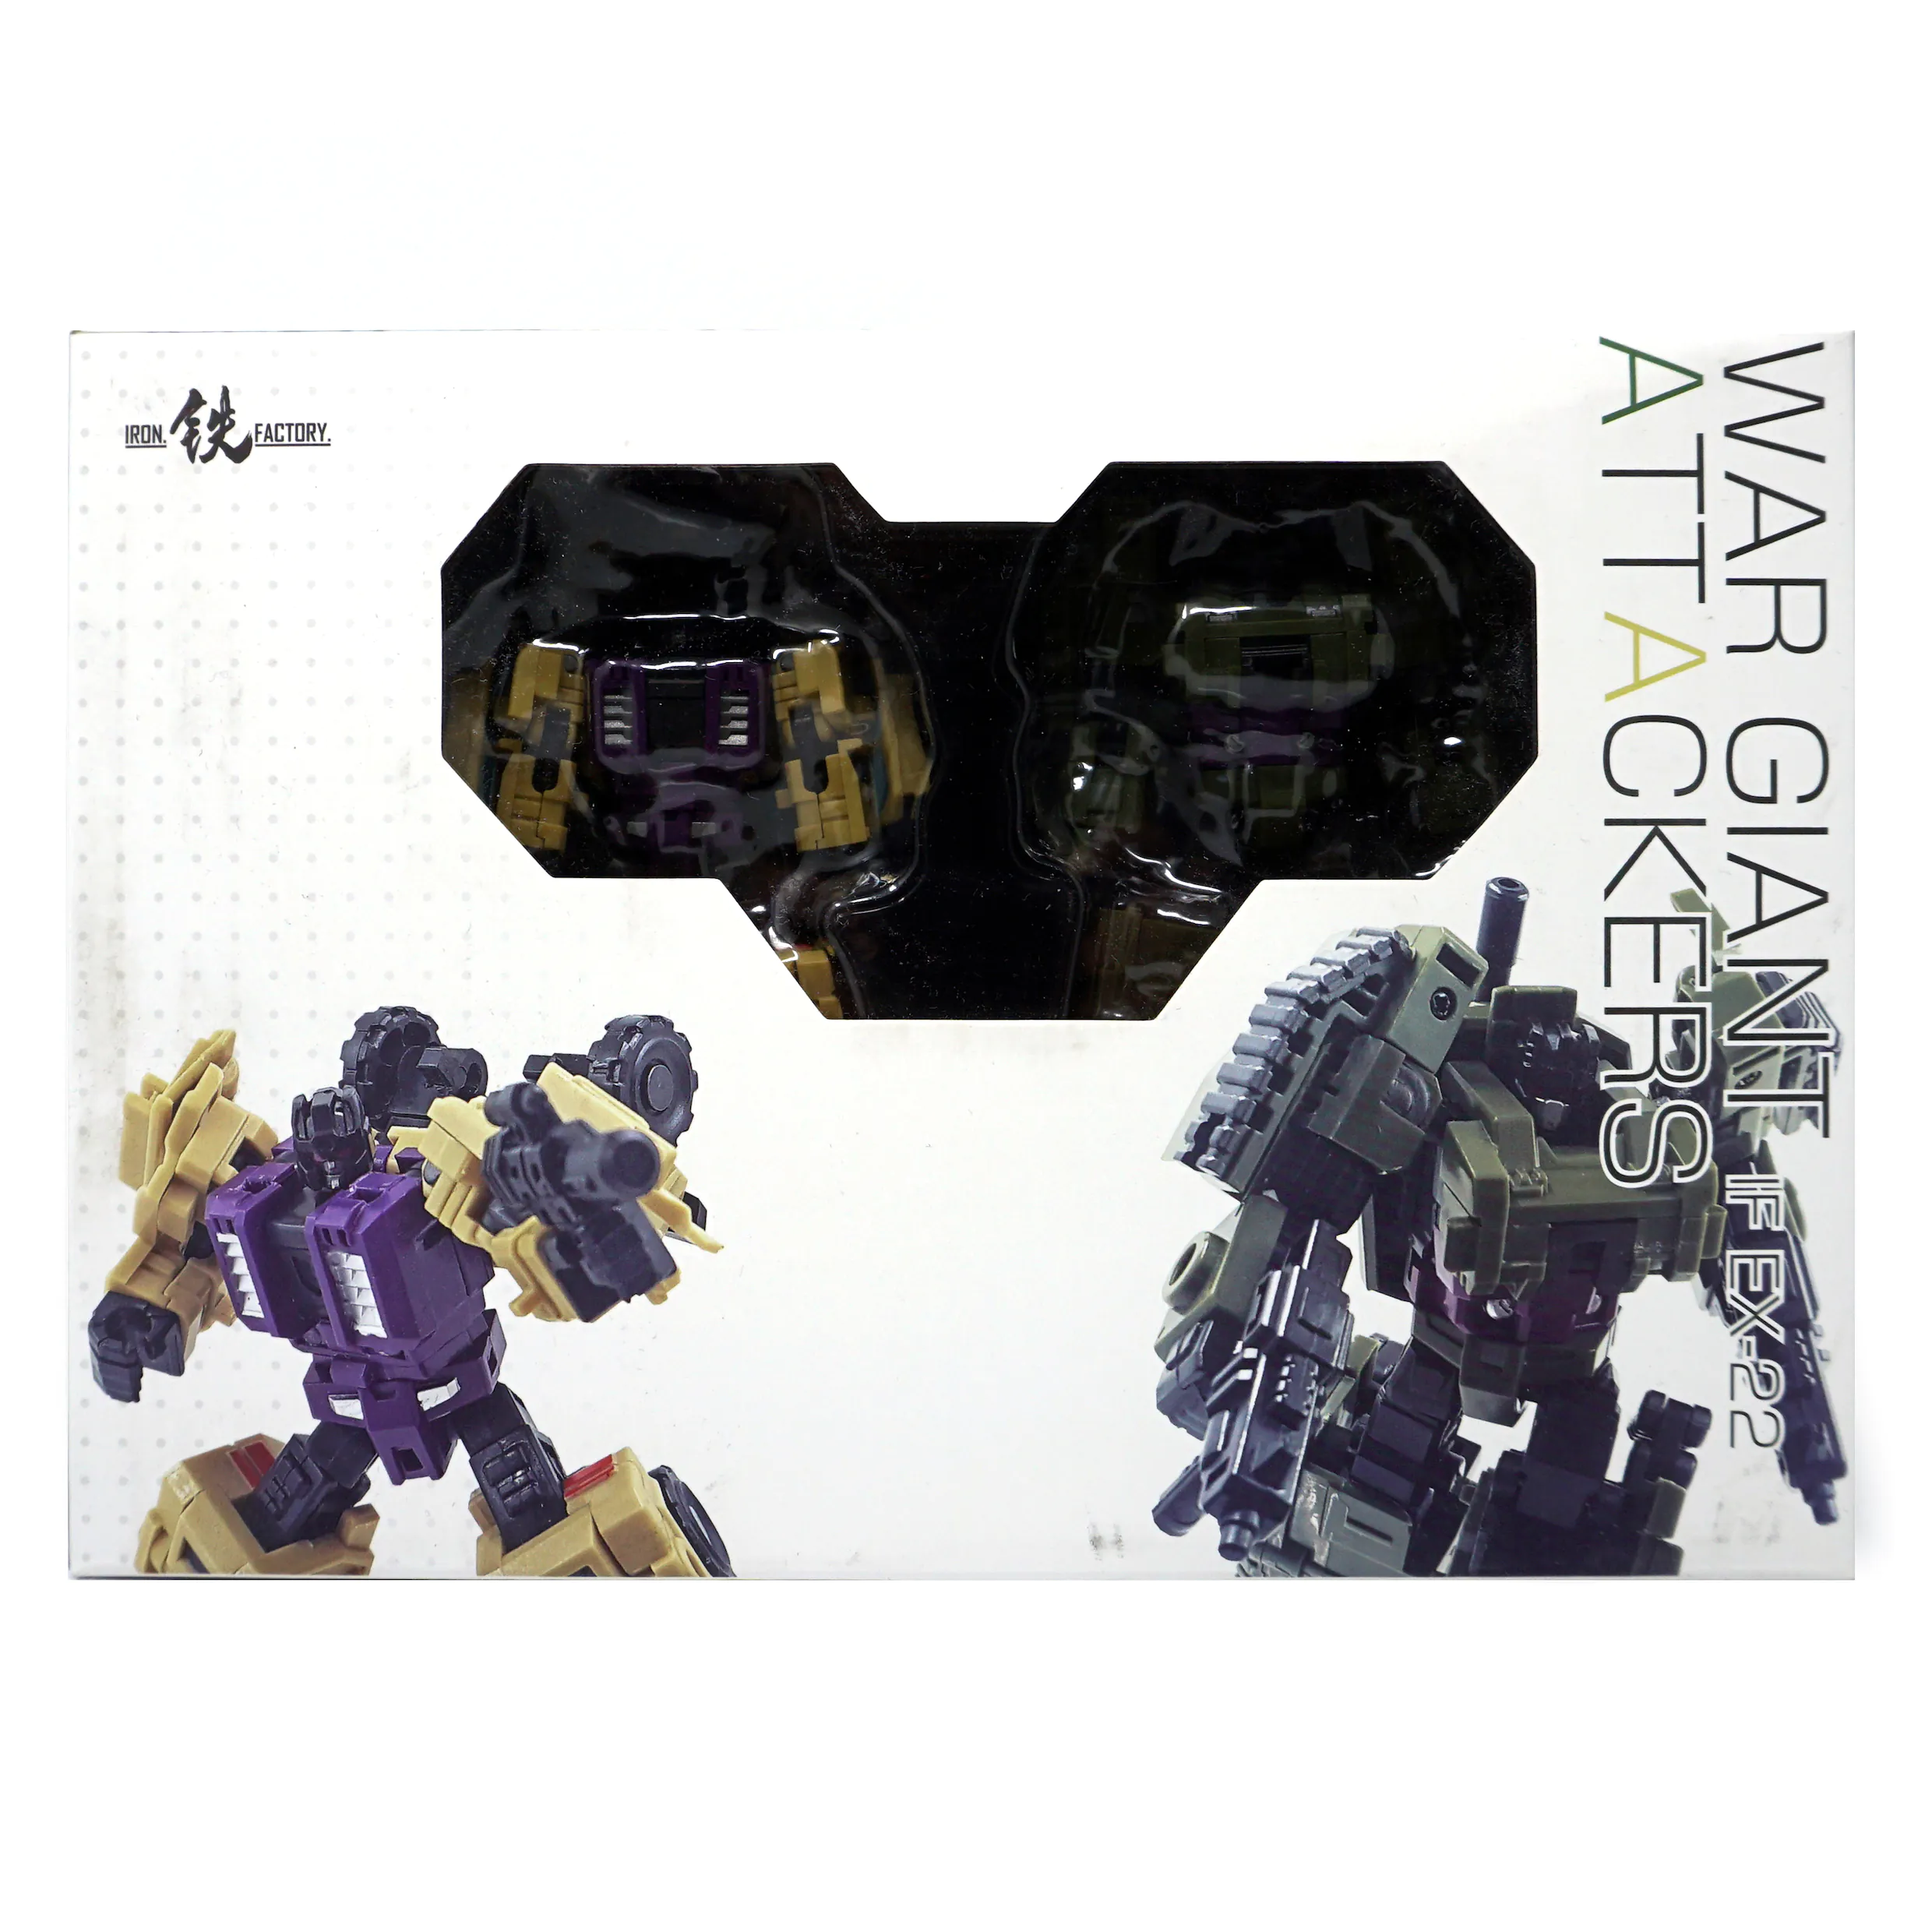 Transformers – Iron Factory IF-EX22 WarGiant